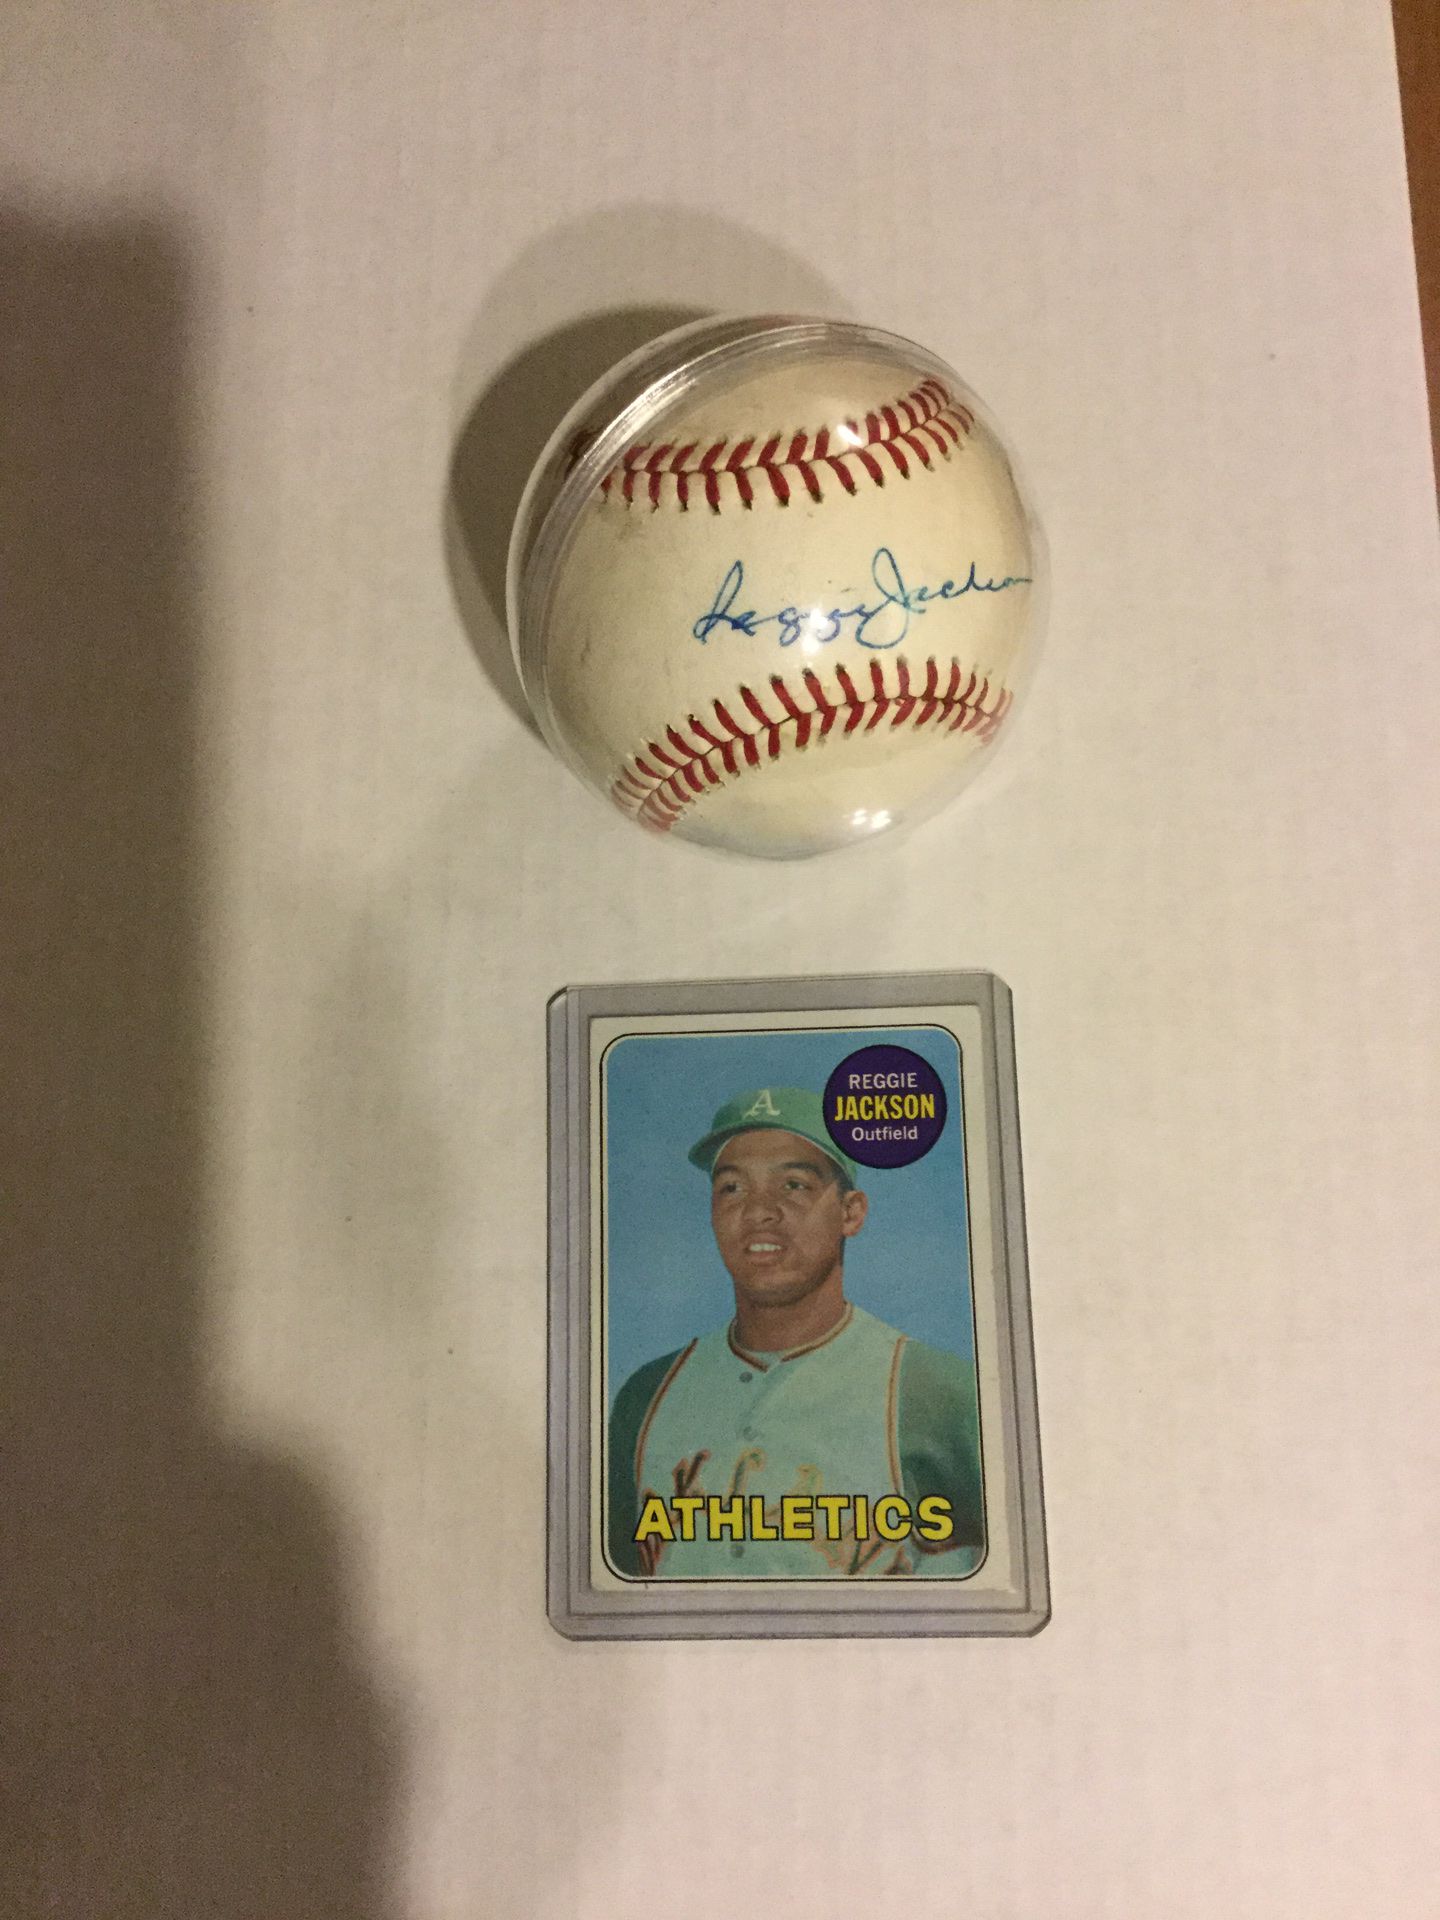 Reggie Jackson rookie baseball card and autographed baseball